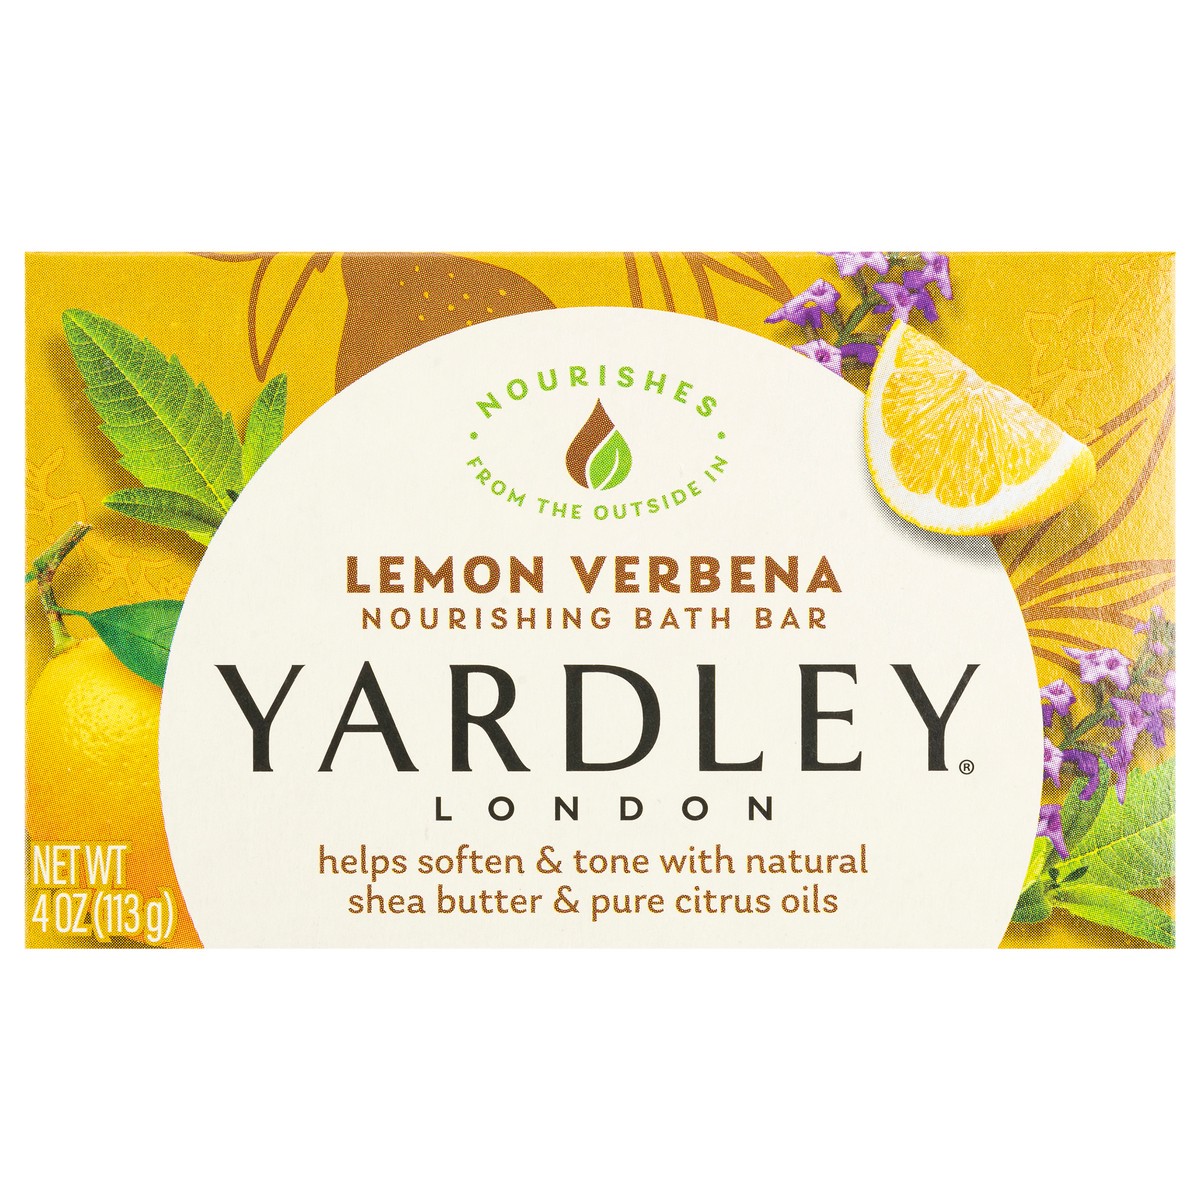 slide 9 of 12, Yardley London Nourishing Bath Soap Bar Lemon Verbena, Helps Soften & Tone Skin with Natural Shea Butter & Pure Citrus Oils, 4.0 oz Bath Bar, 1 Soap Bar, 4 oz